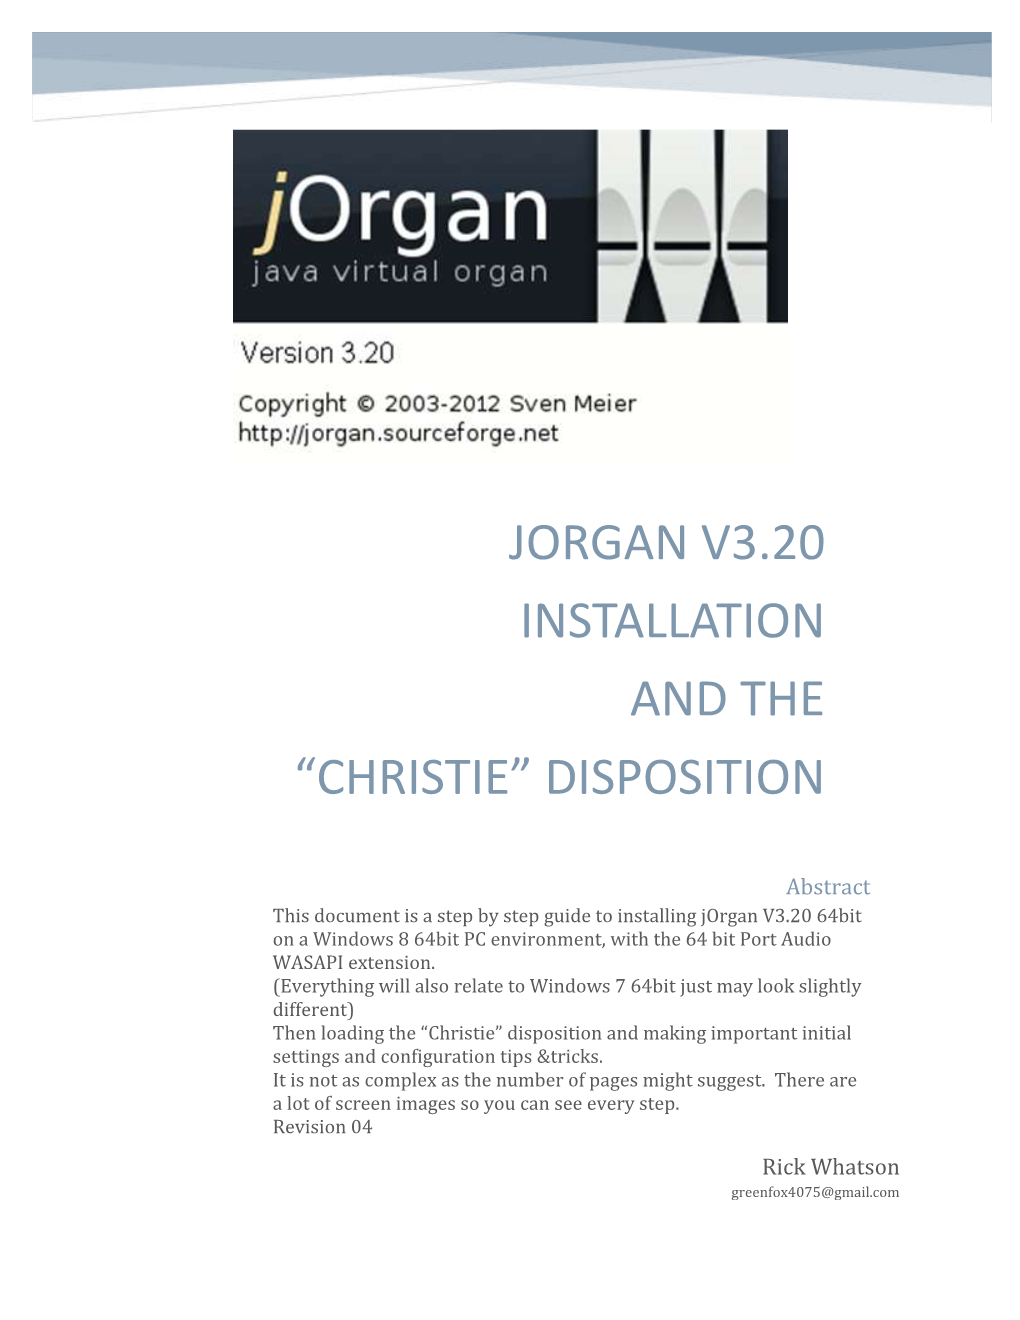 Jorgan V3.20 Installation and the “Christie” Disposition